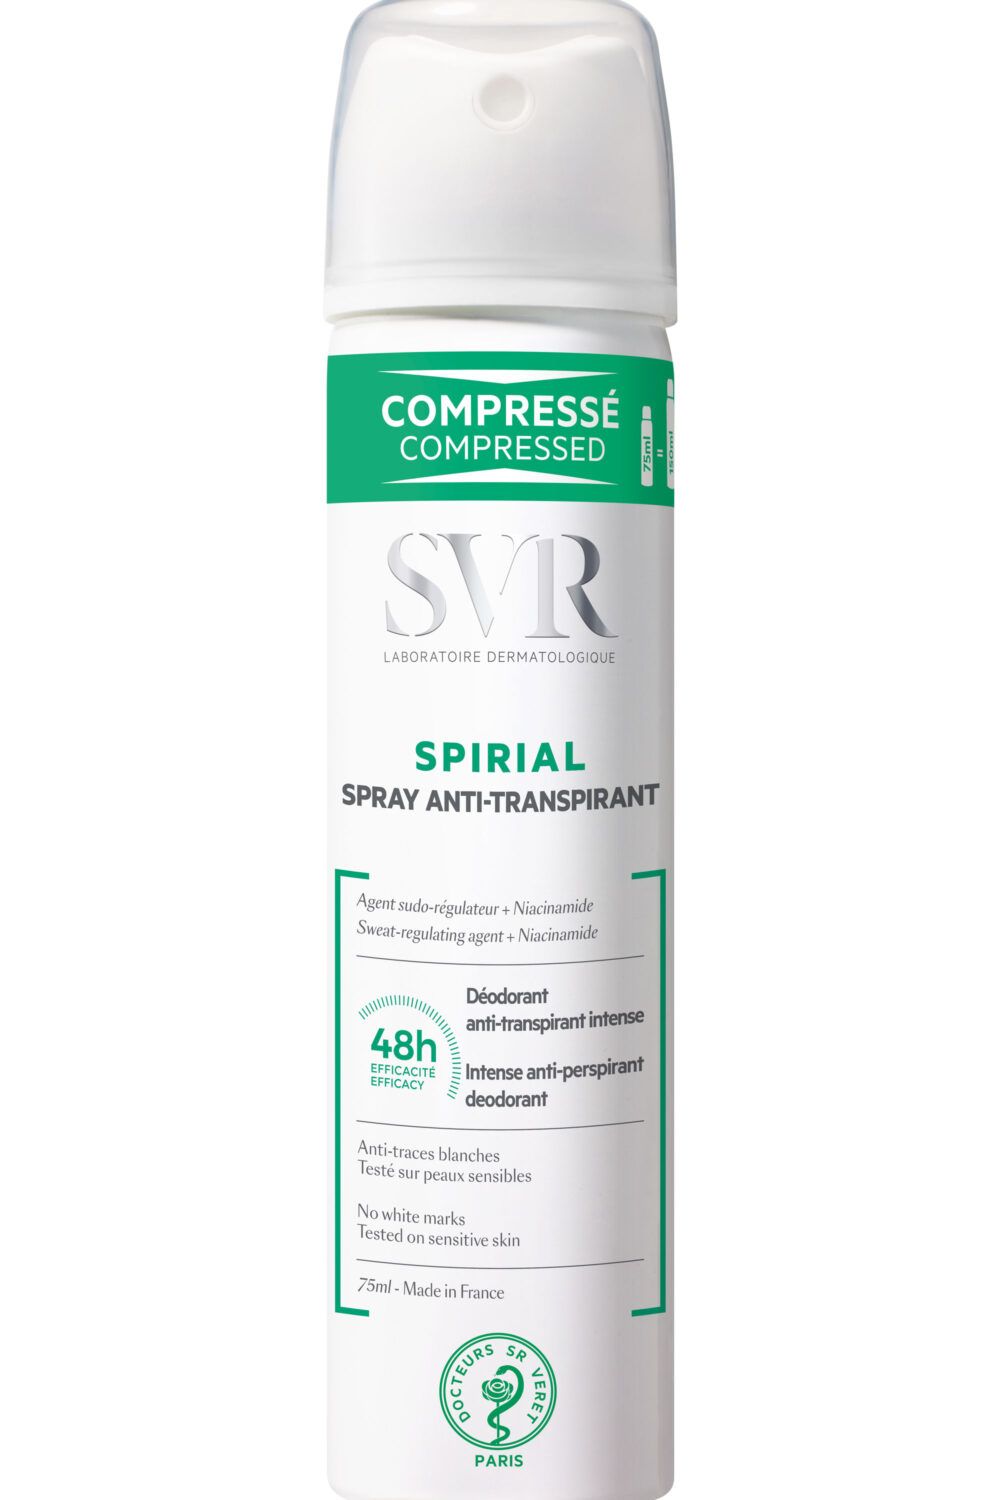 SVR - Déodorant anti-transpirant intense 48H Spirial Spray